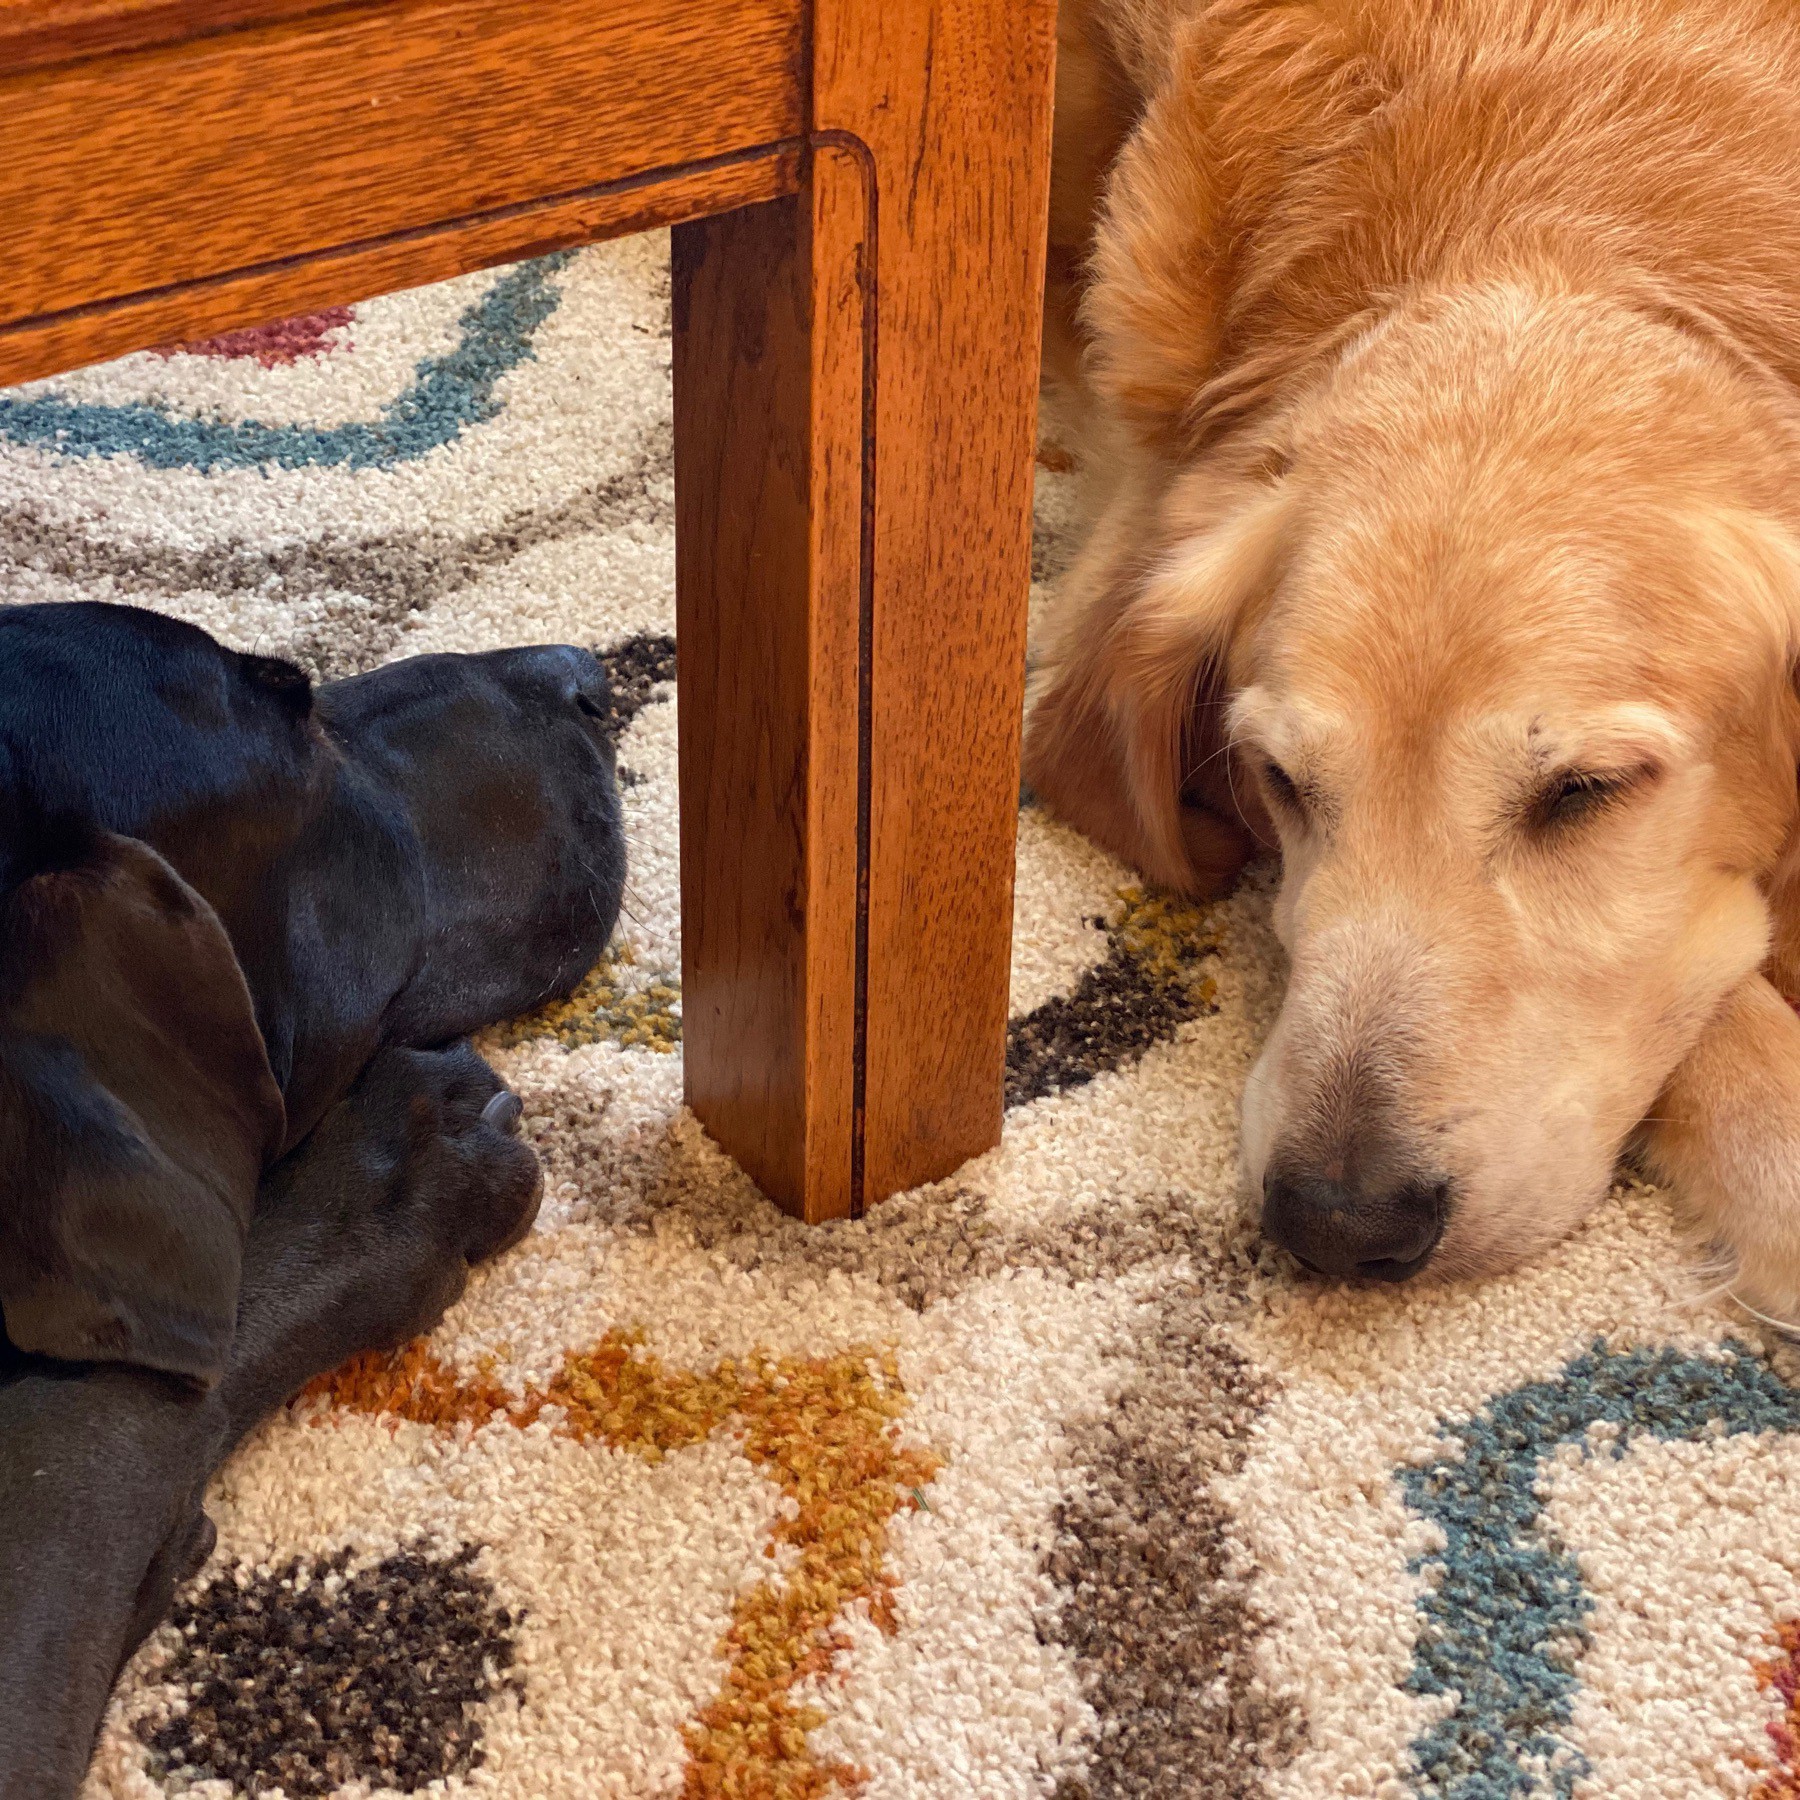 Dogs sleeping on carpet.